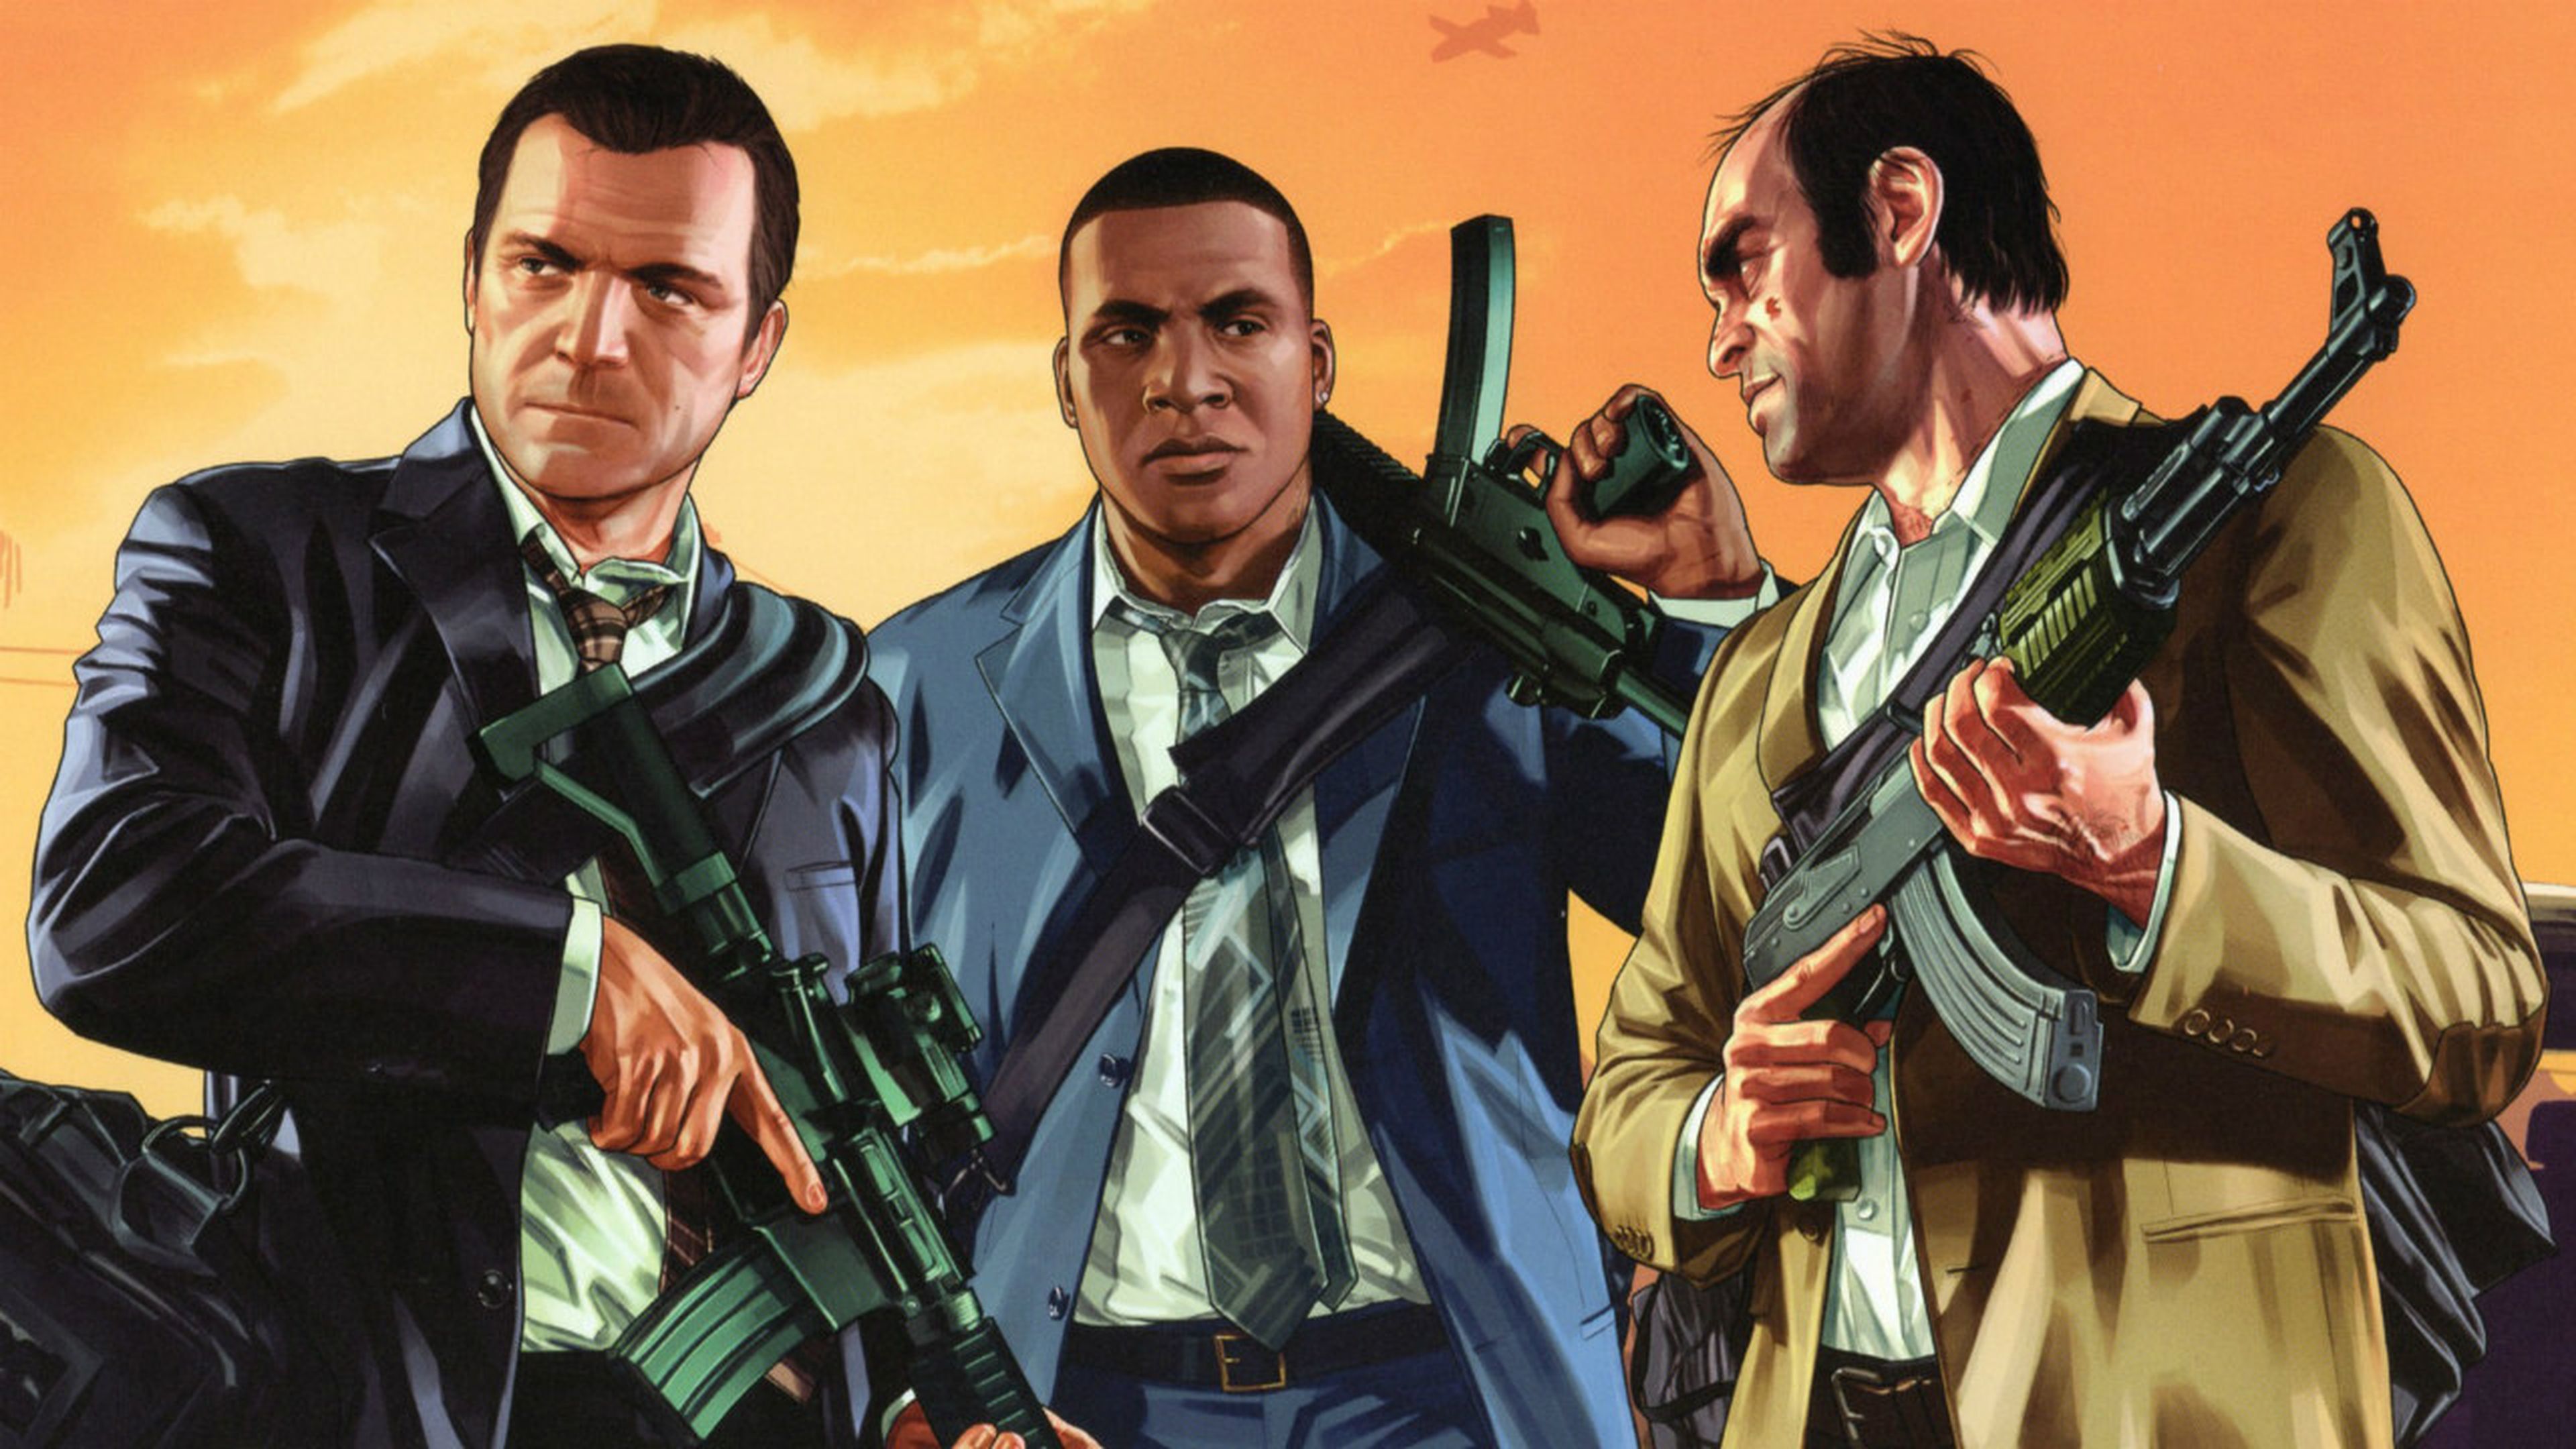 1 - Grand Theft Auto V: Más de 80 millones